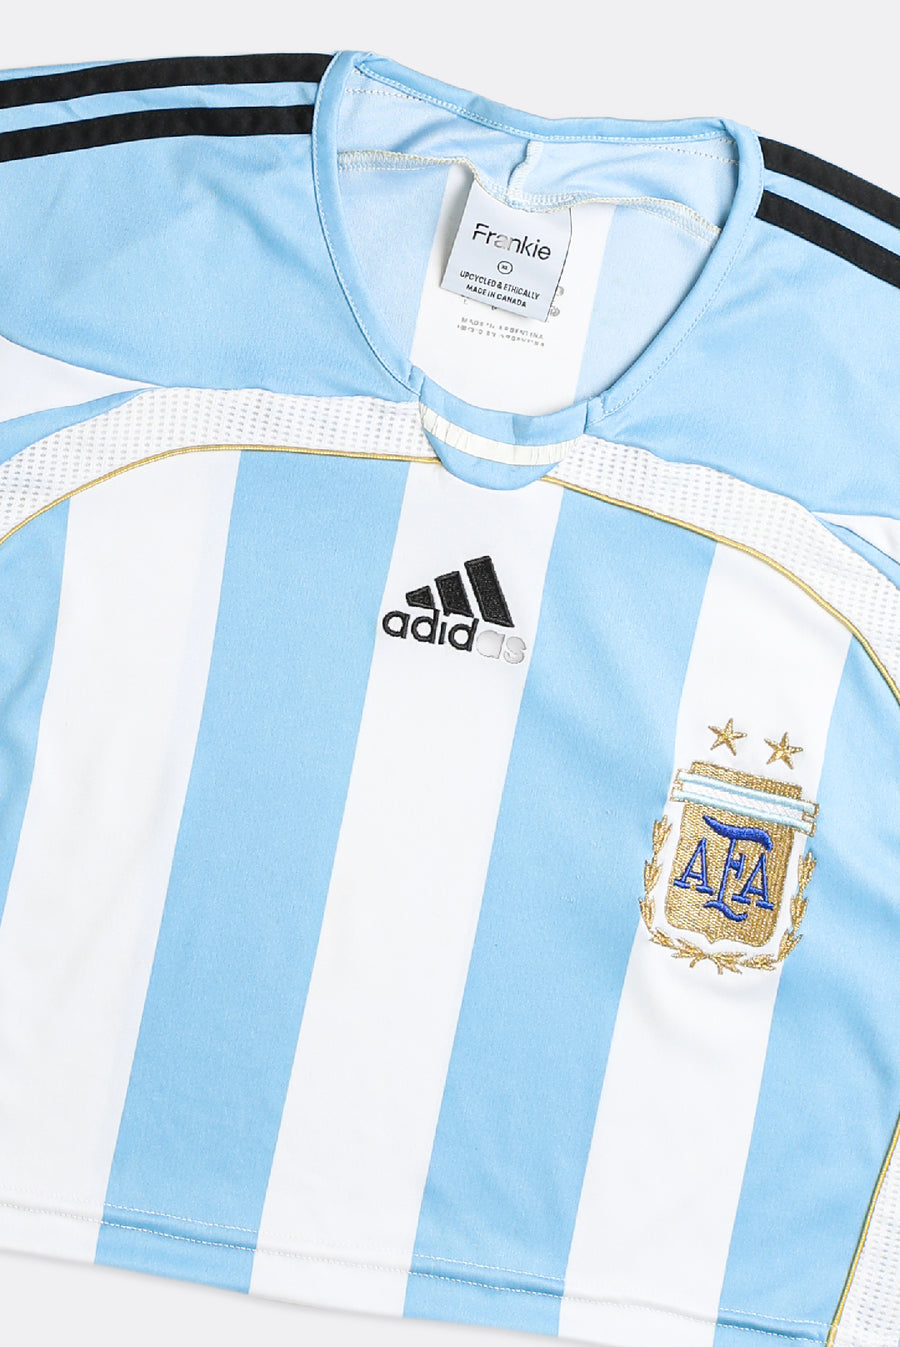 Rework Argentina Crop Soccer Jersey - S, XL